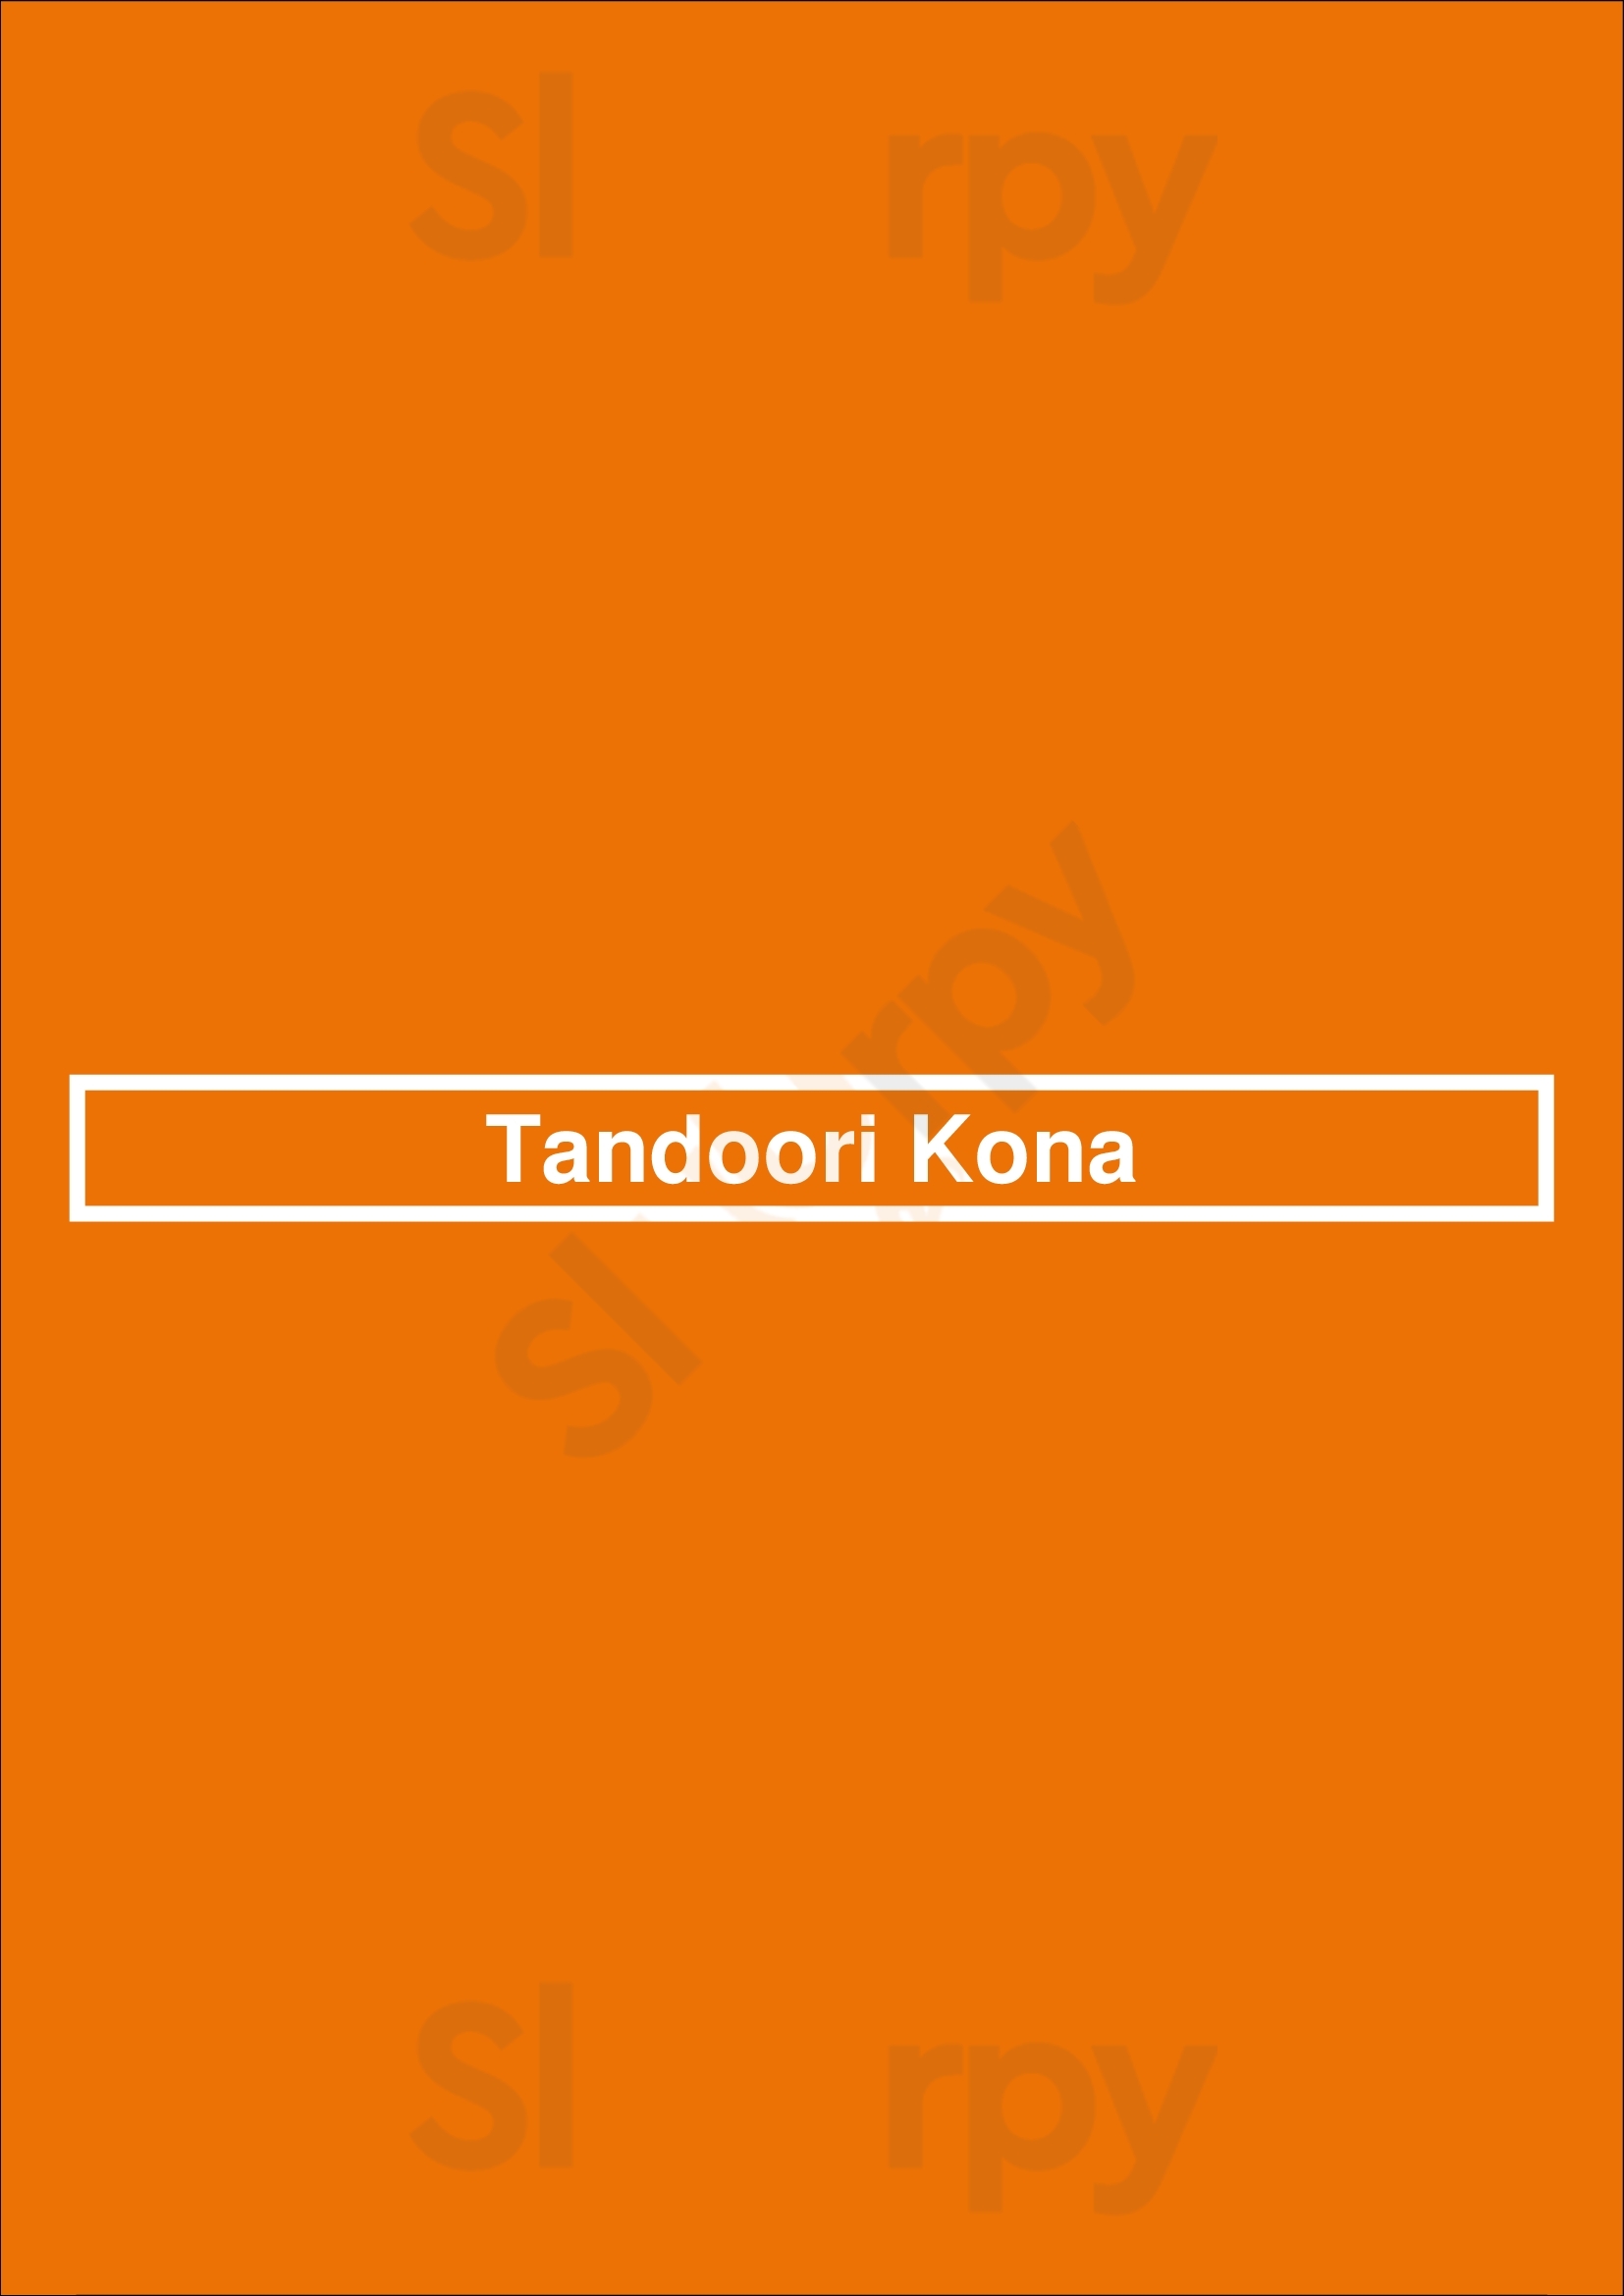 Tandoori Kona Richmond Menu - 1